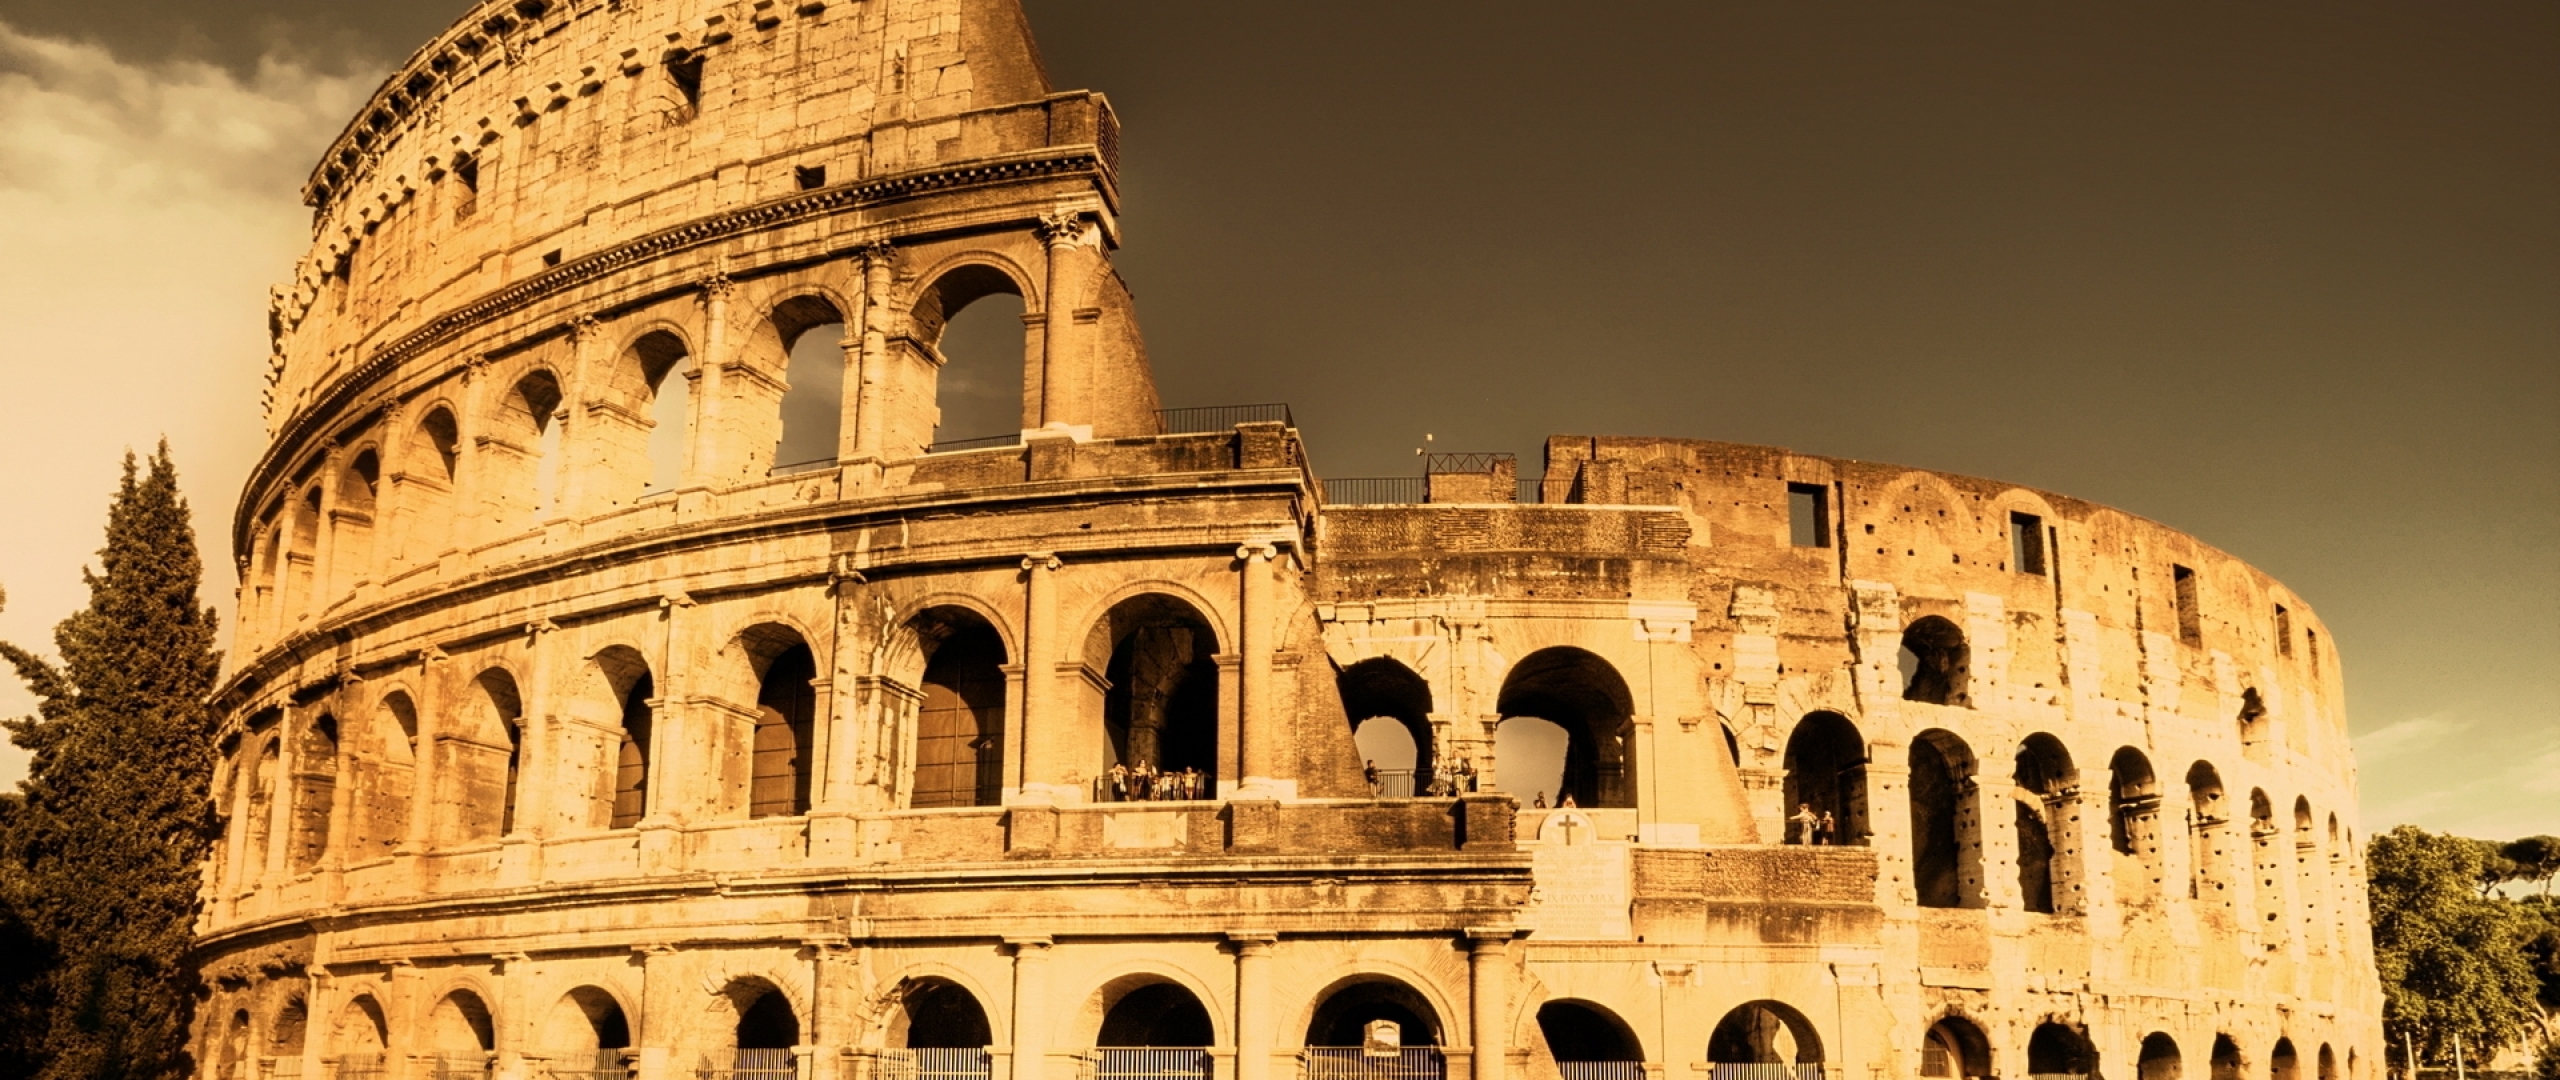 2560x1080 City, Colosseum, Ancient Rome 2560x1080 Resolution Wallpaper 